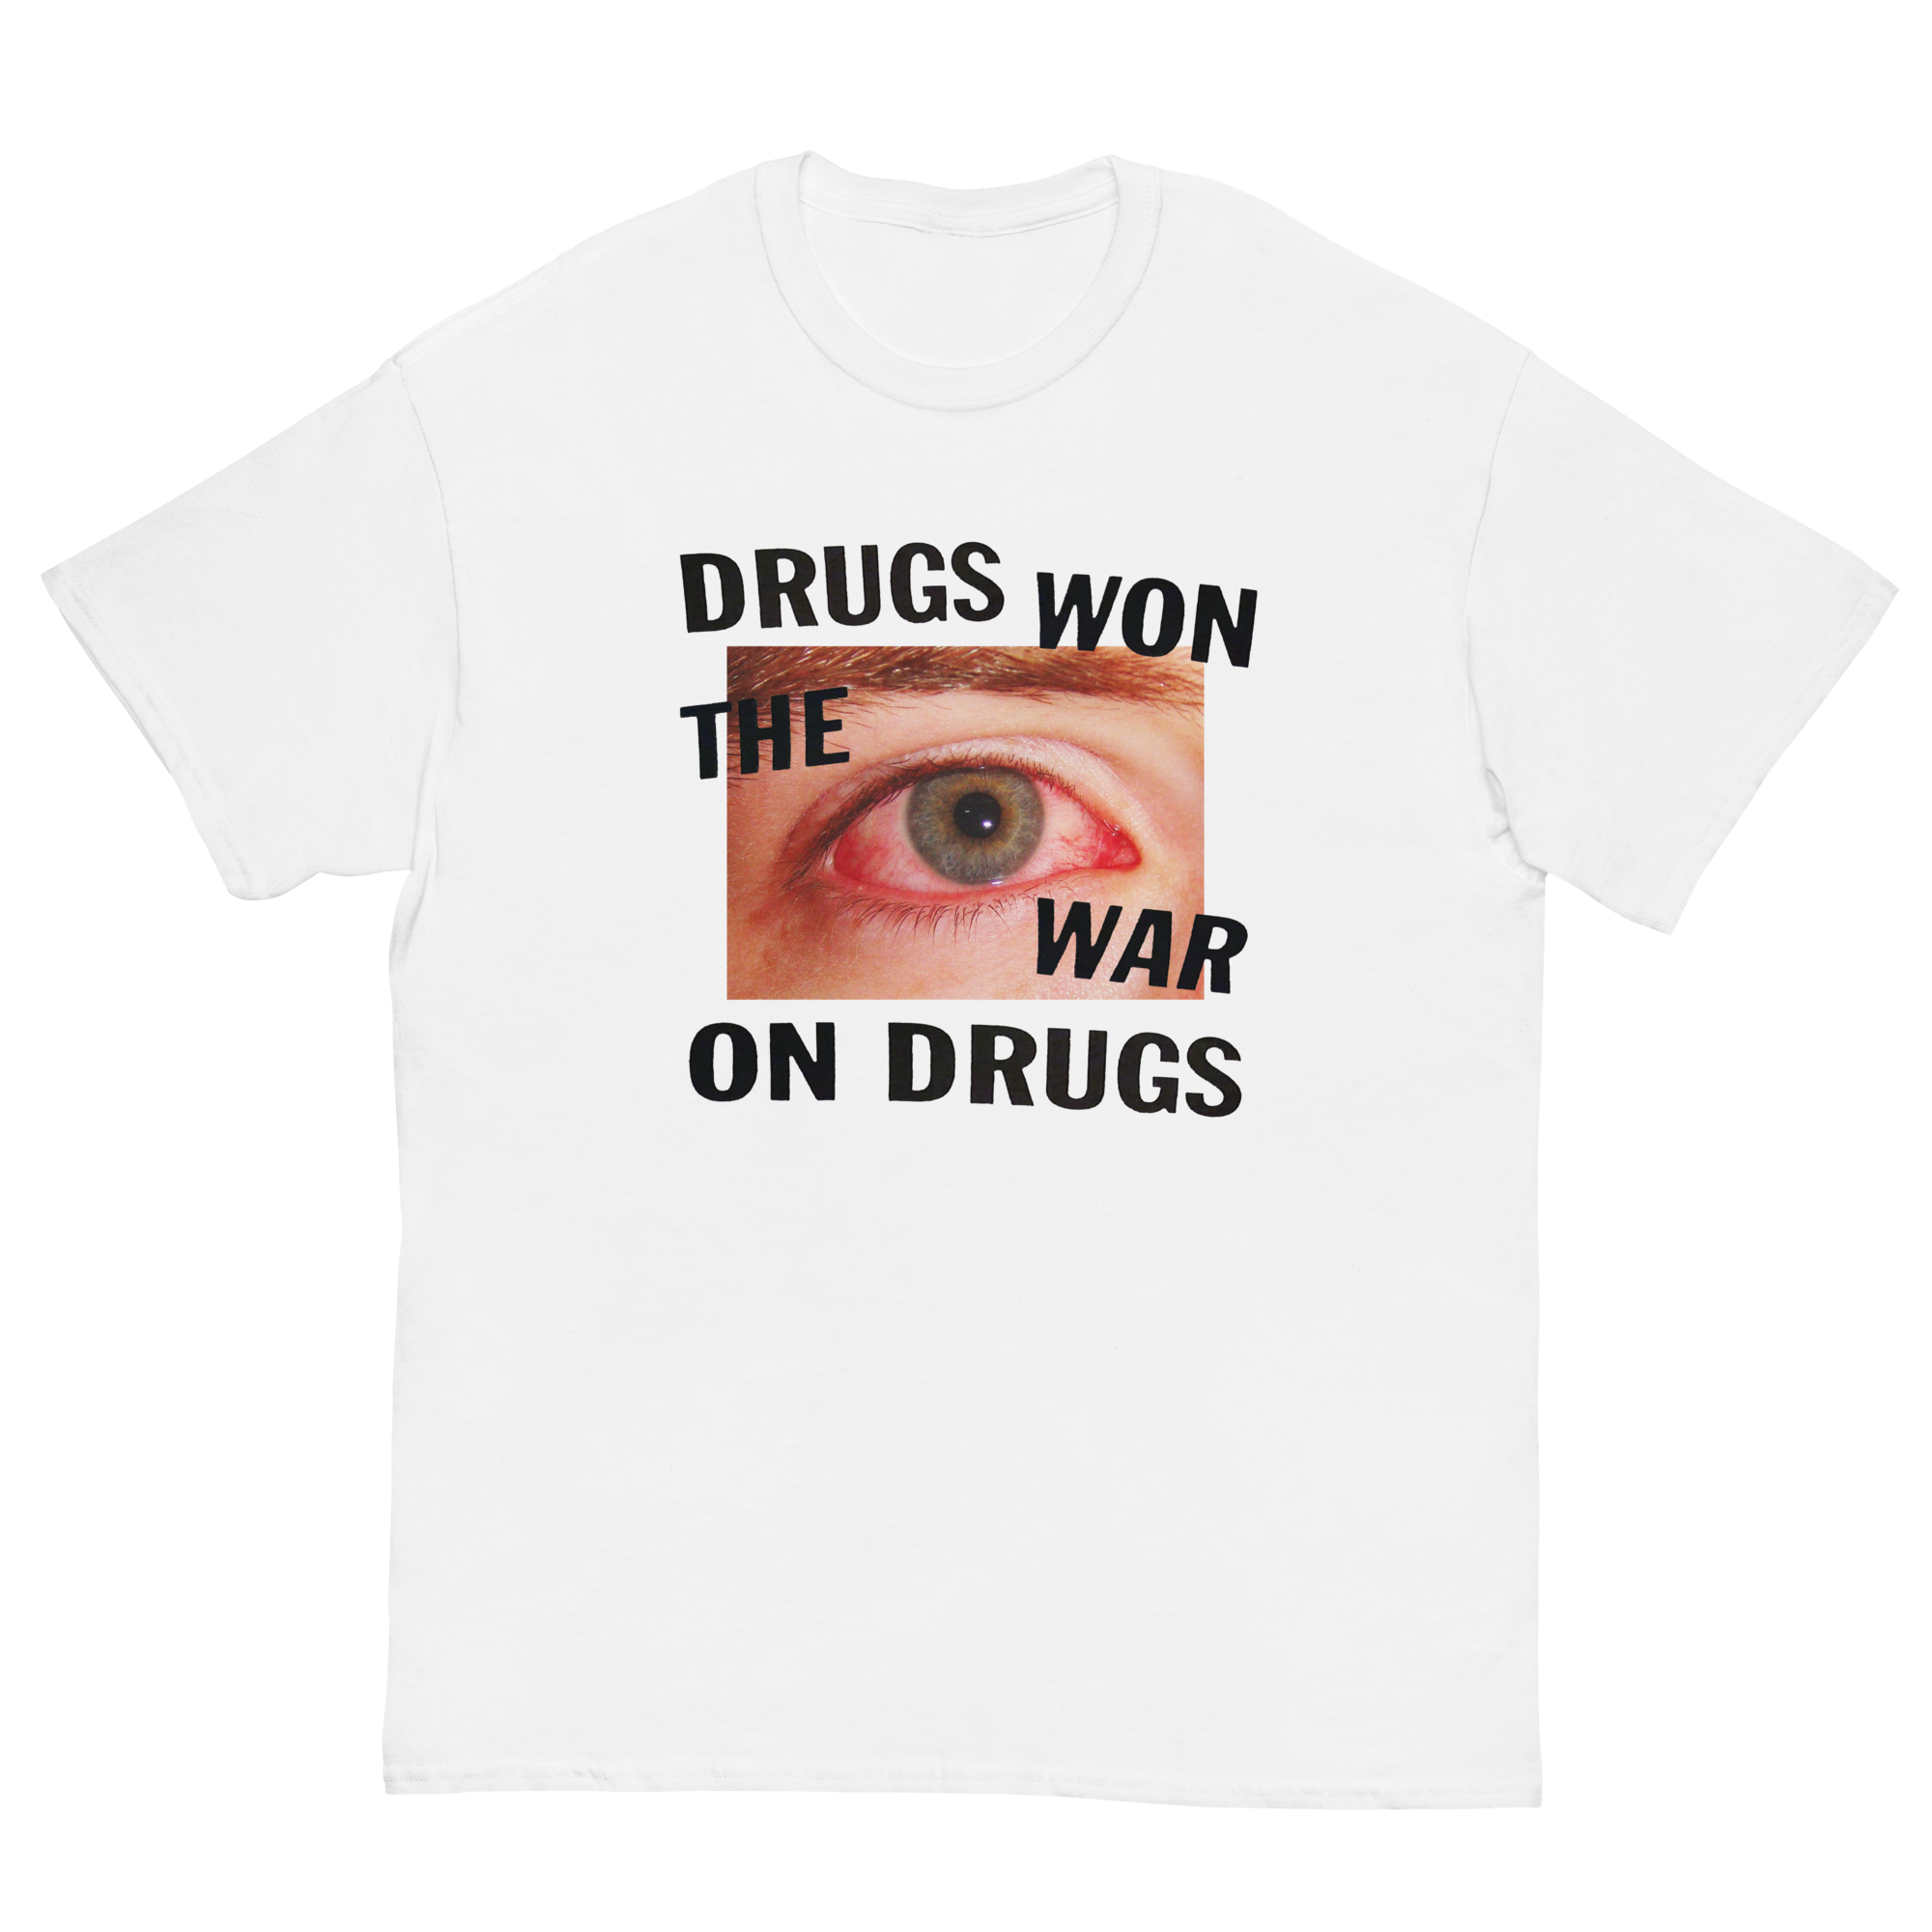 WAR ON DRUGS T-SHIRT